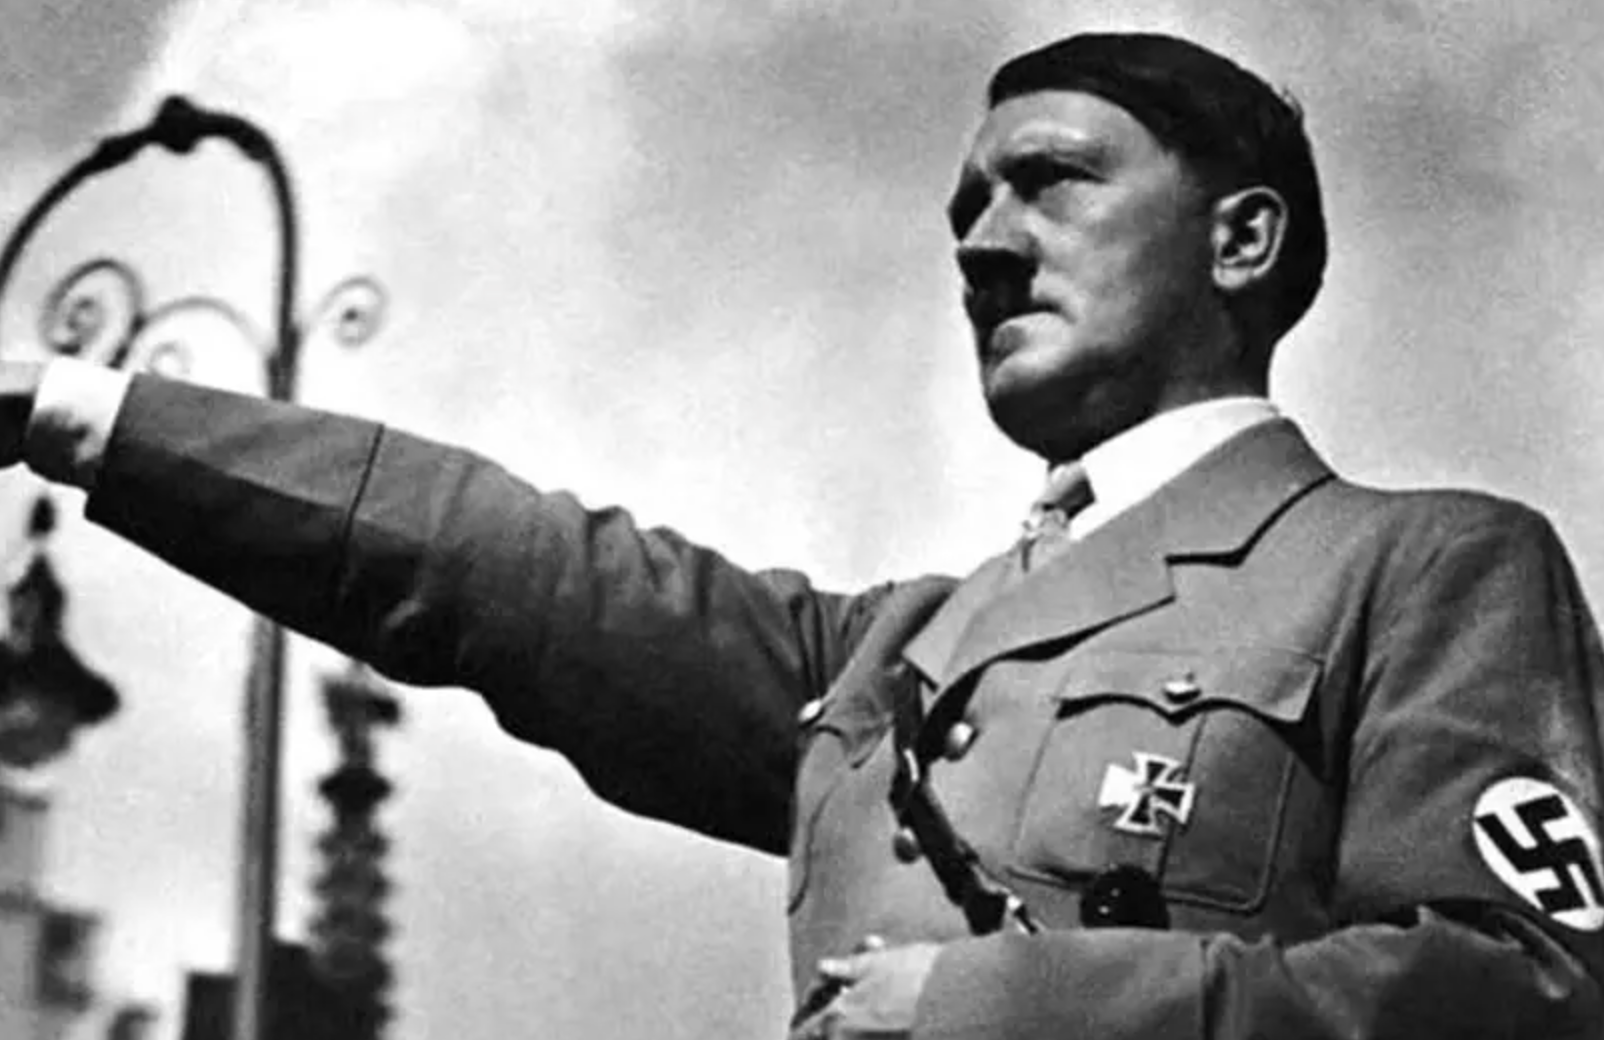 Democrat Brenda Forman posts fake Adolf Hitler quote to social media